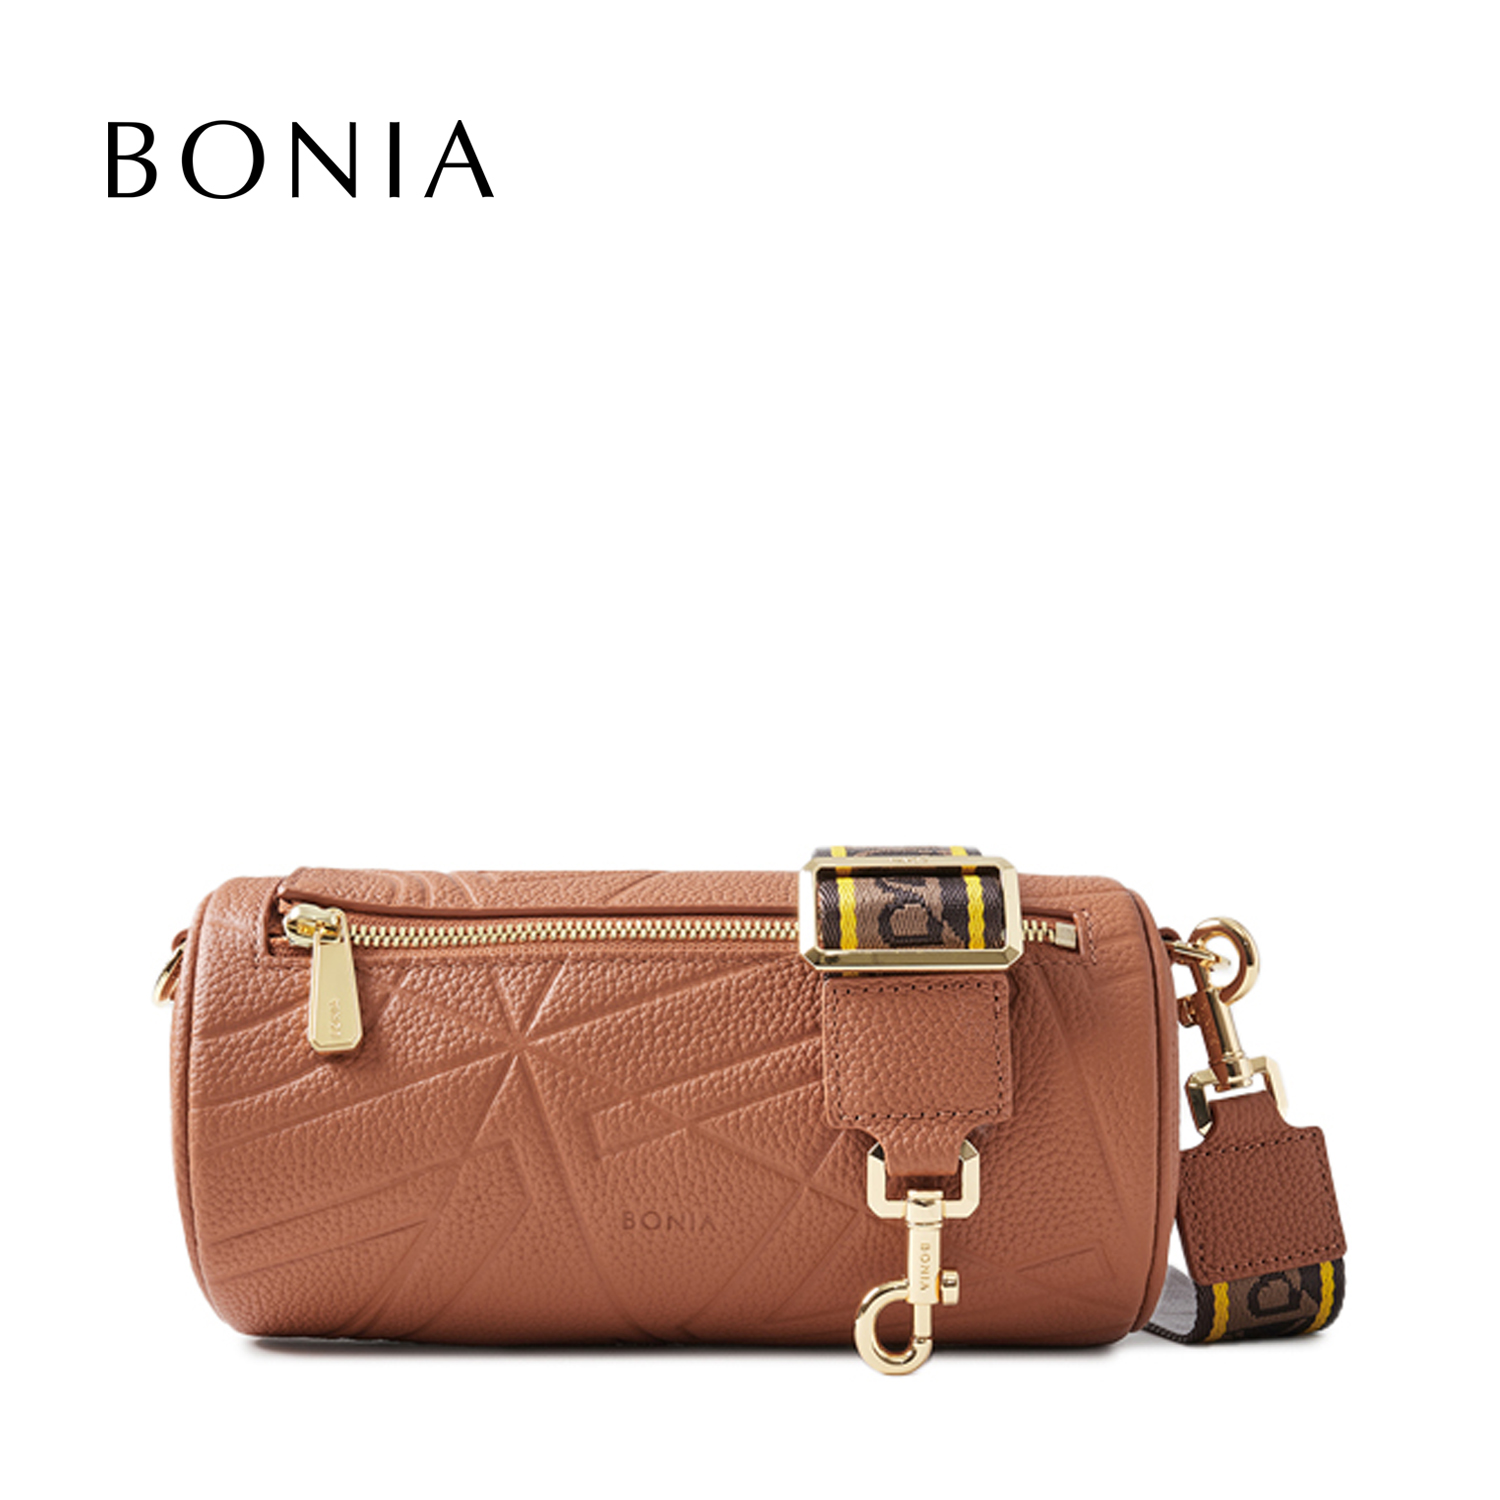 bonia crossbody bag